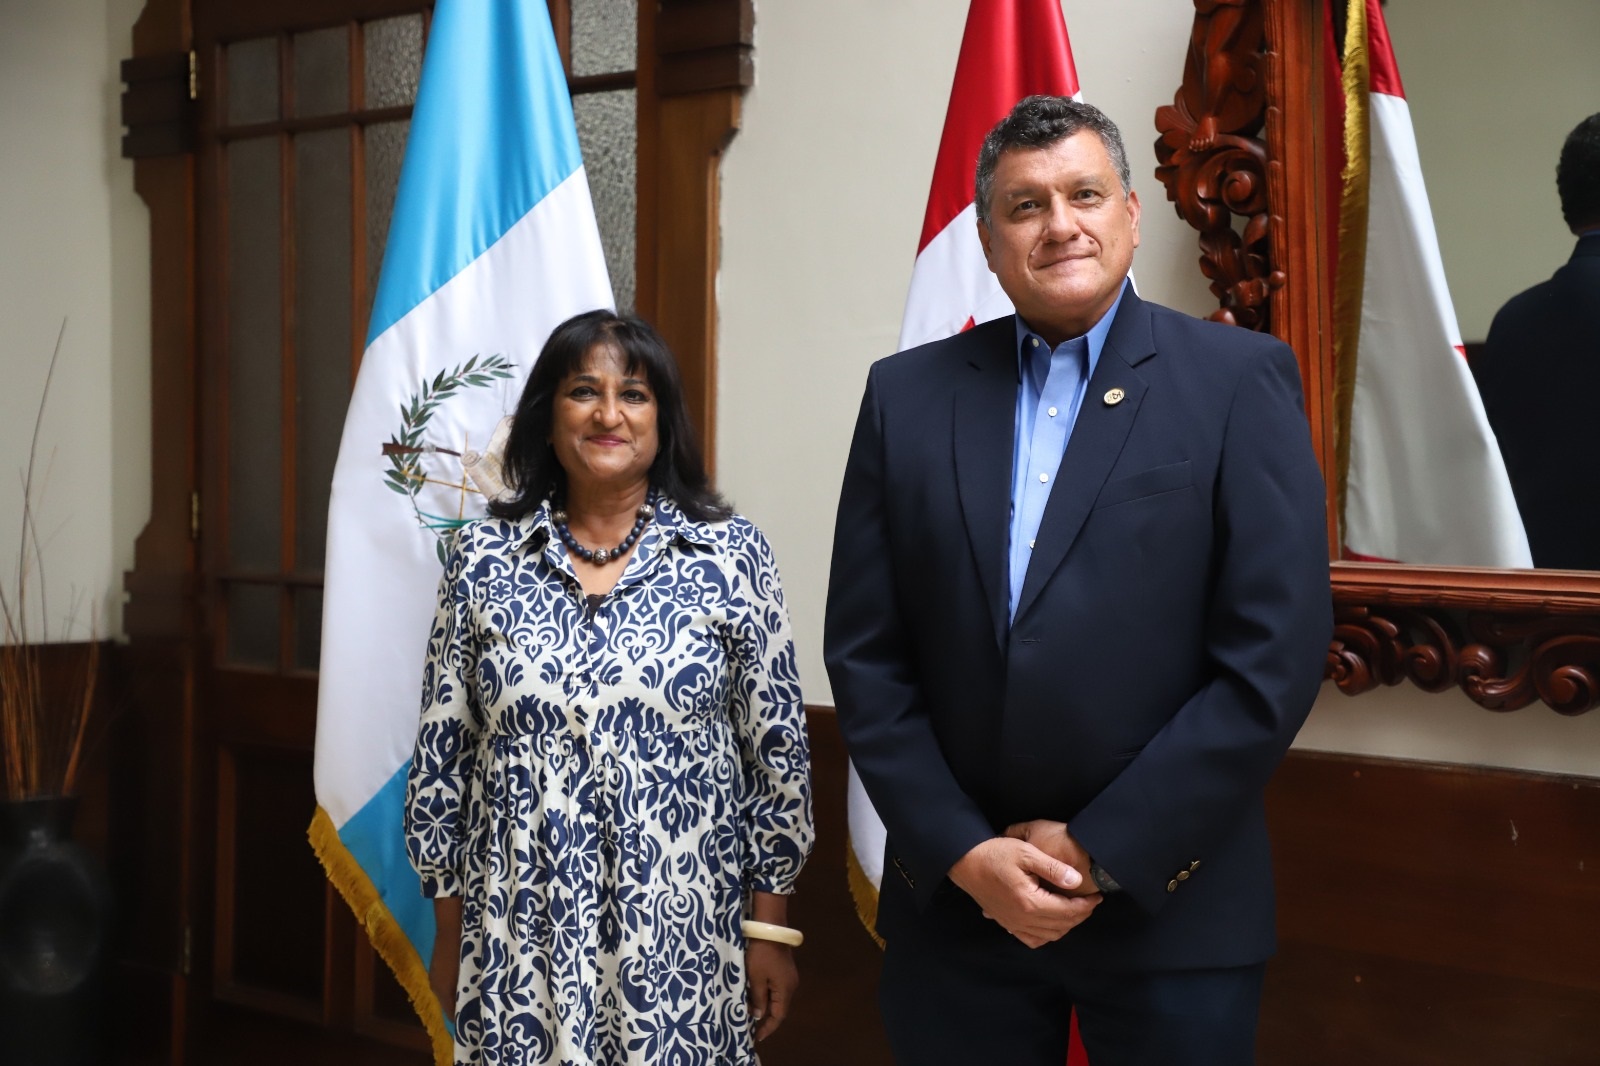 Ambassador Alexander with Guillermo Castillo, the Vice-President of the Republic of Guatemala.